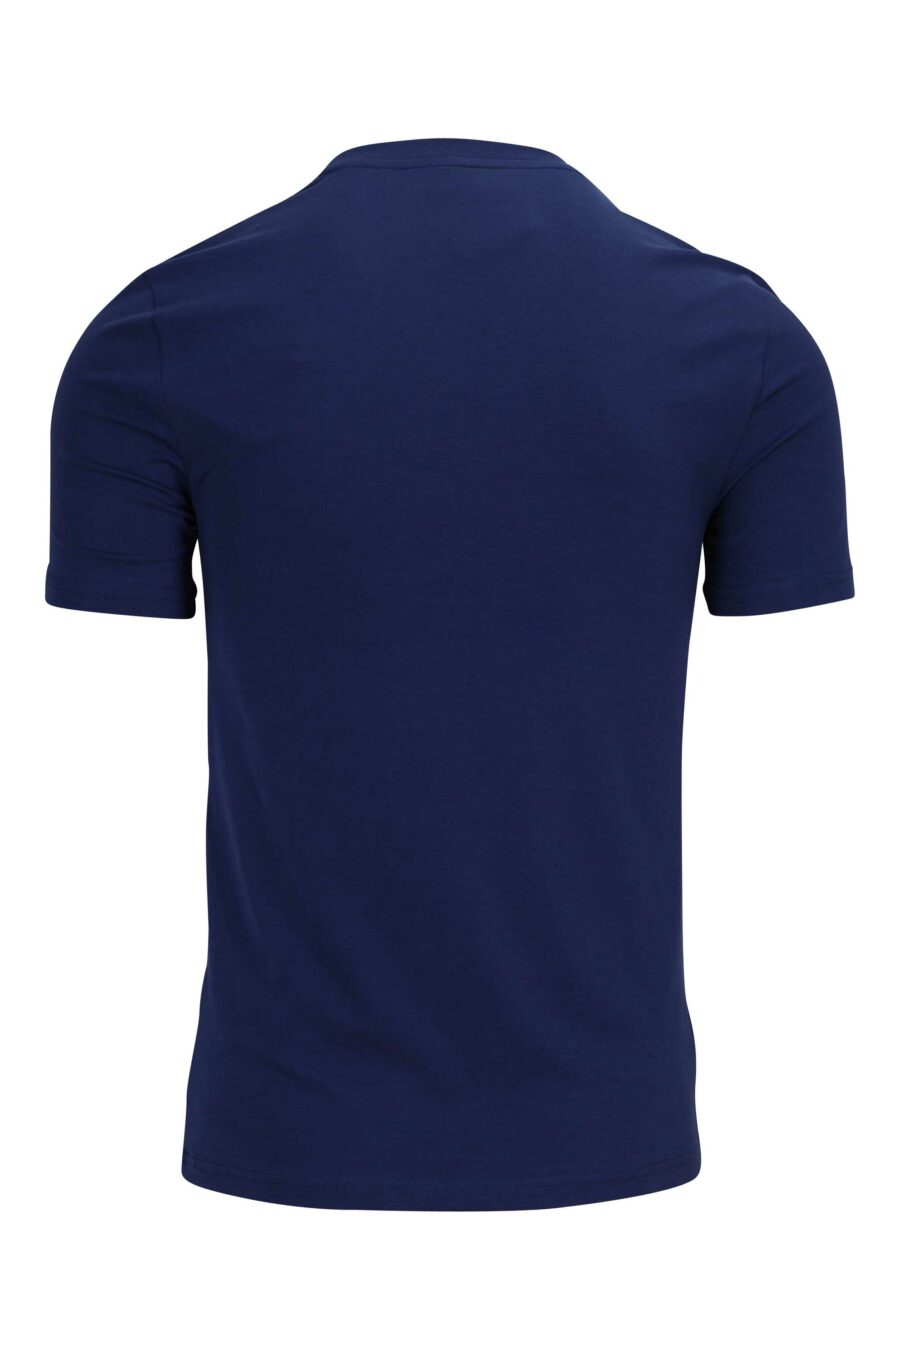 Marineblaues T-Shirt mit schwarzem Maxilogo - 889316649383 1